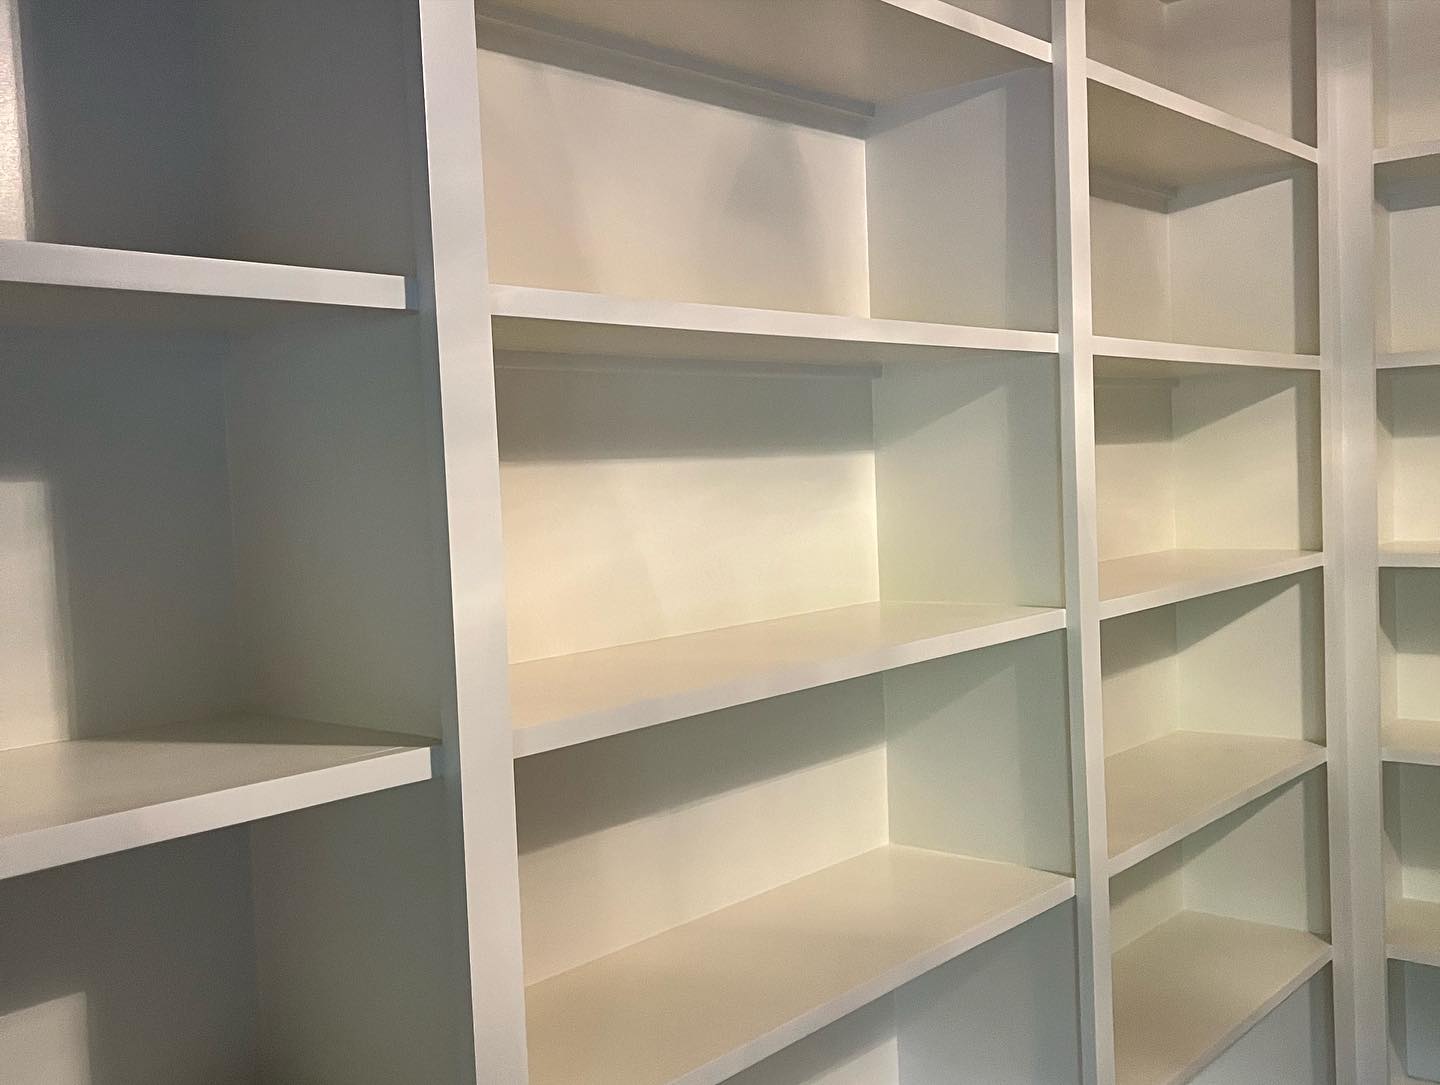 Custom Large Bookshelf Built in Cabinets 1